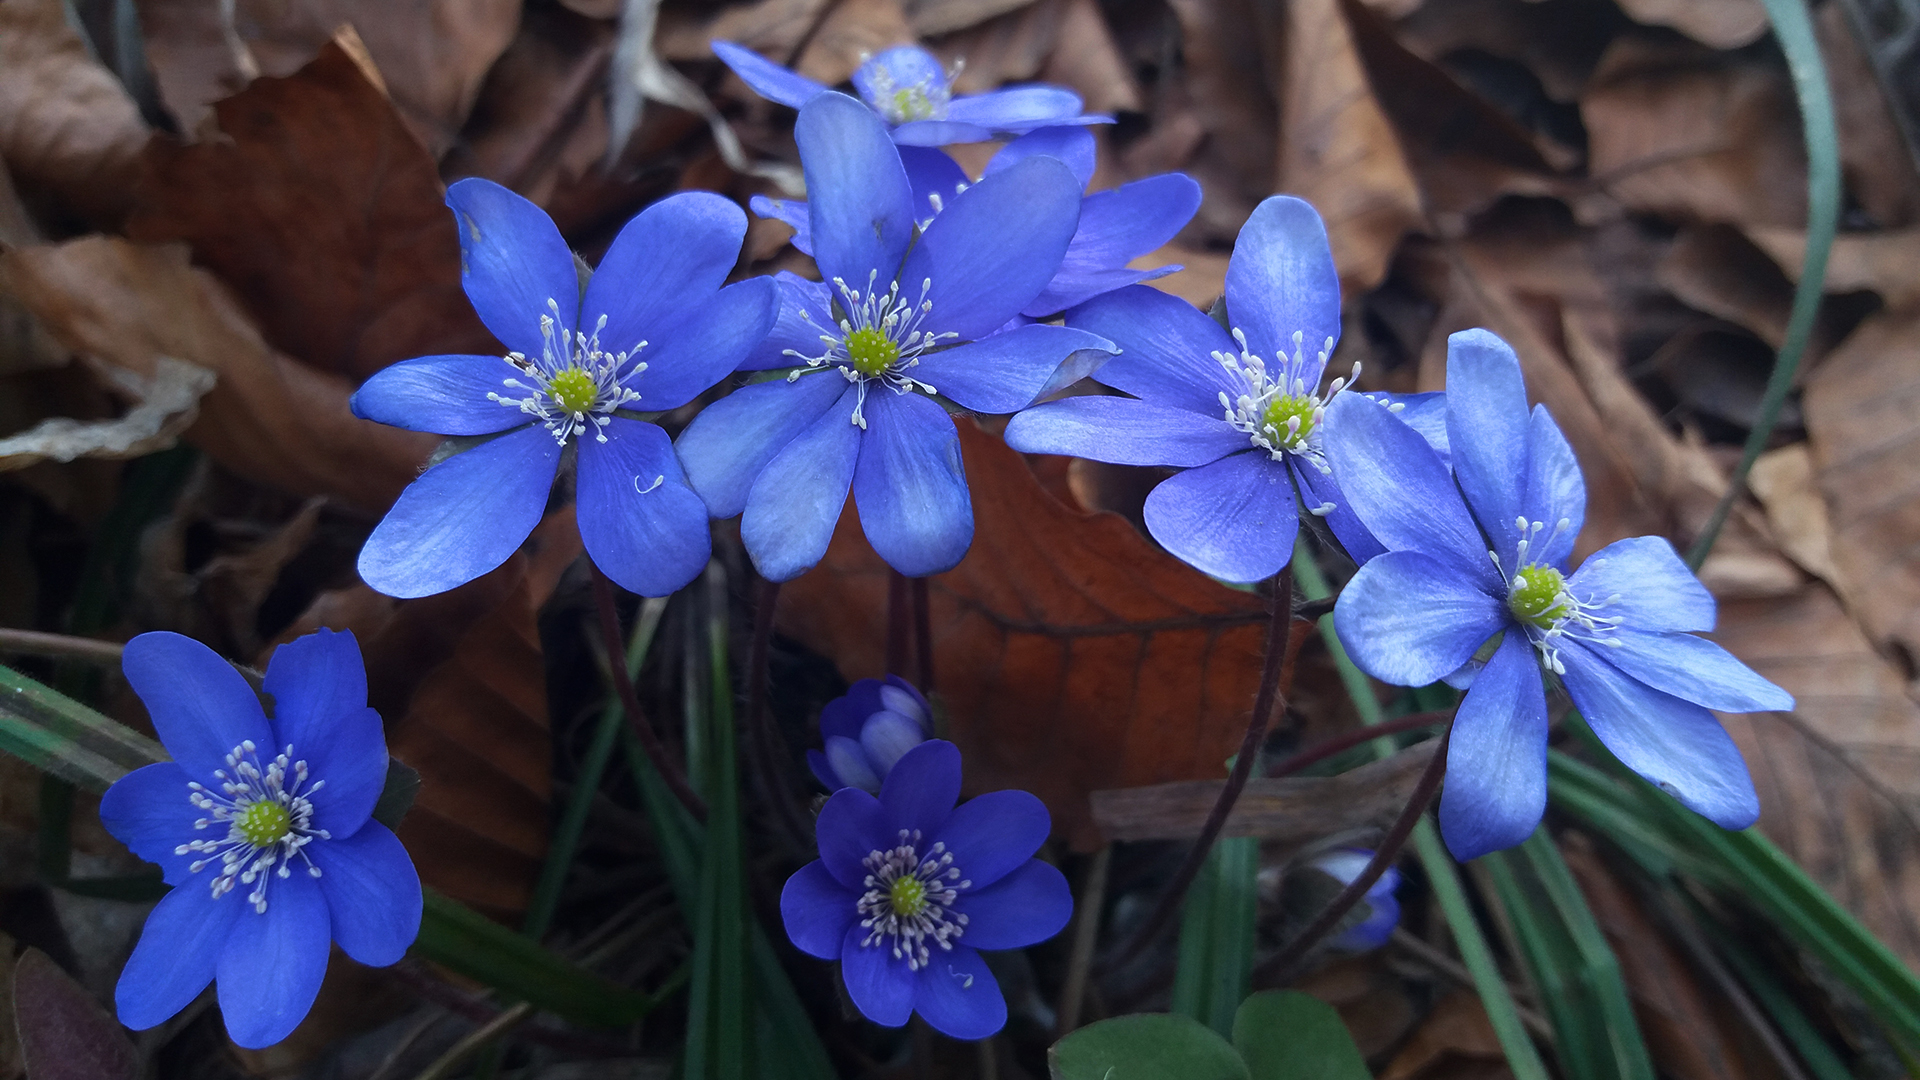 General 1920x1080 nature plants flowers blue flowers bokeh macro